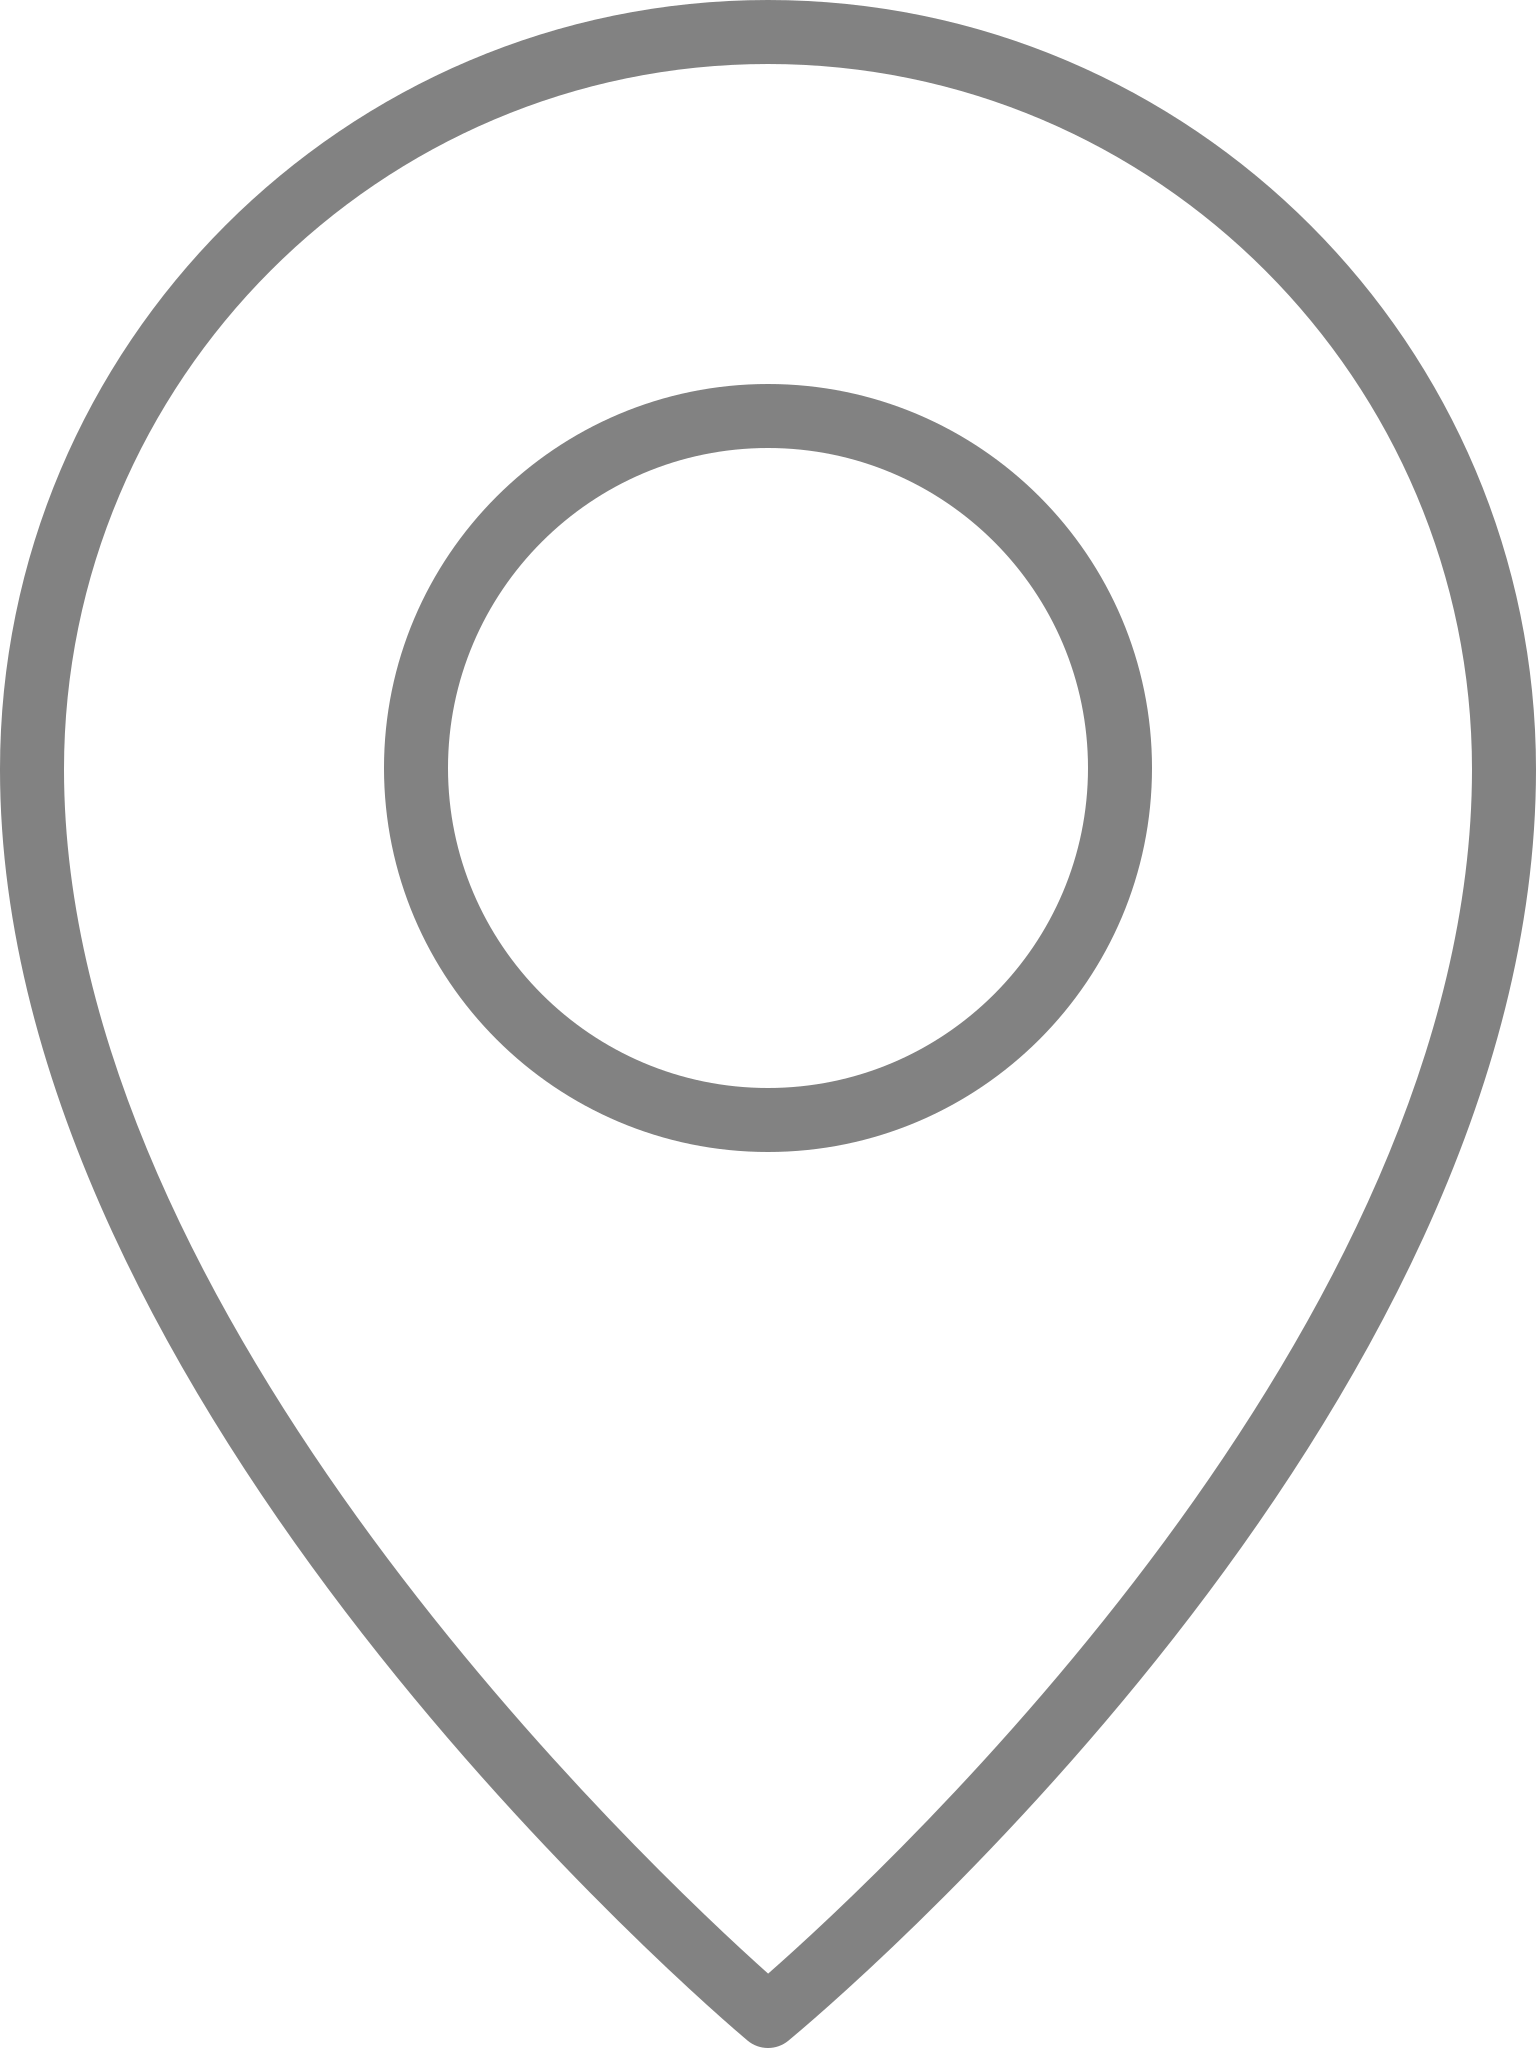 File:Circle-icons-pin.svg - Wikipedia